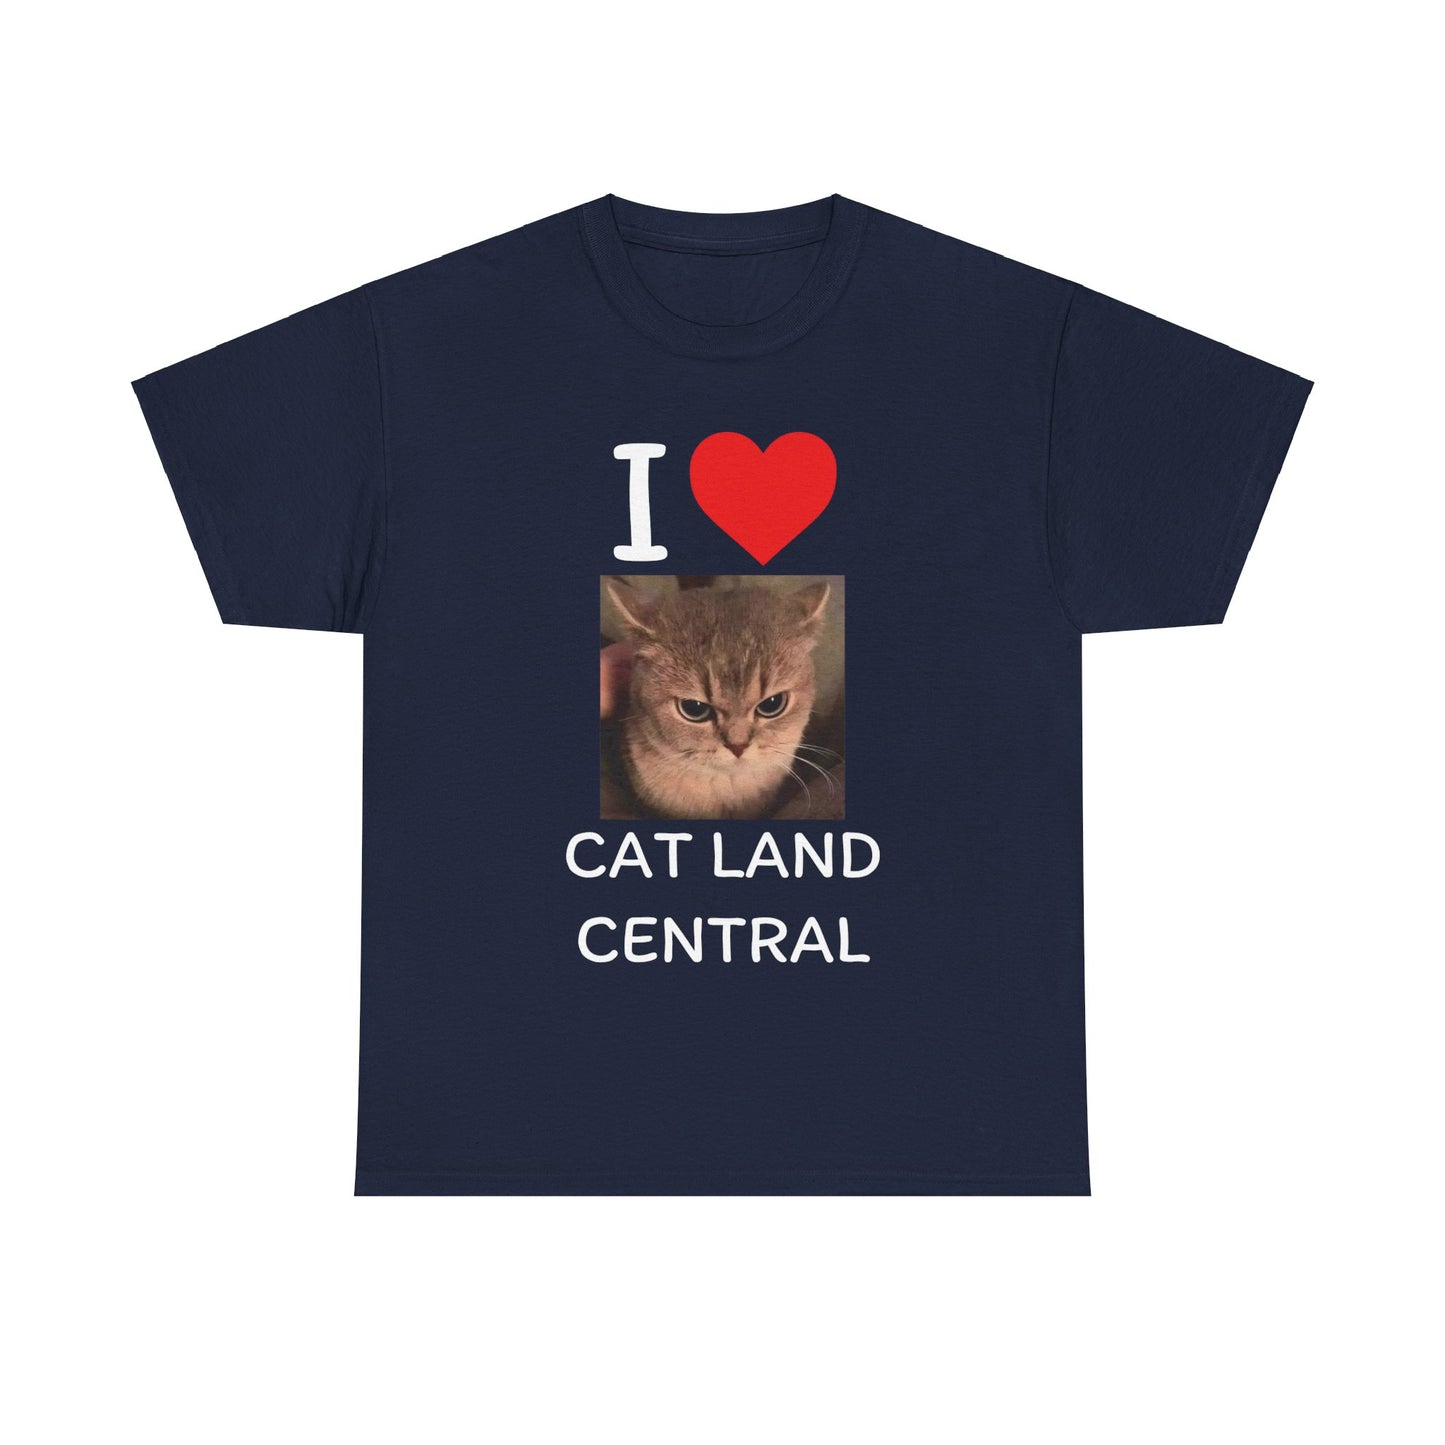 I LOVE CAT LAND CENTRAL T-SHIRT